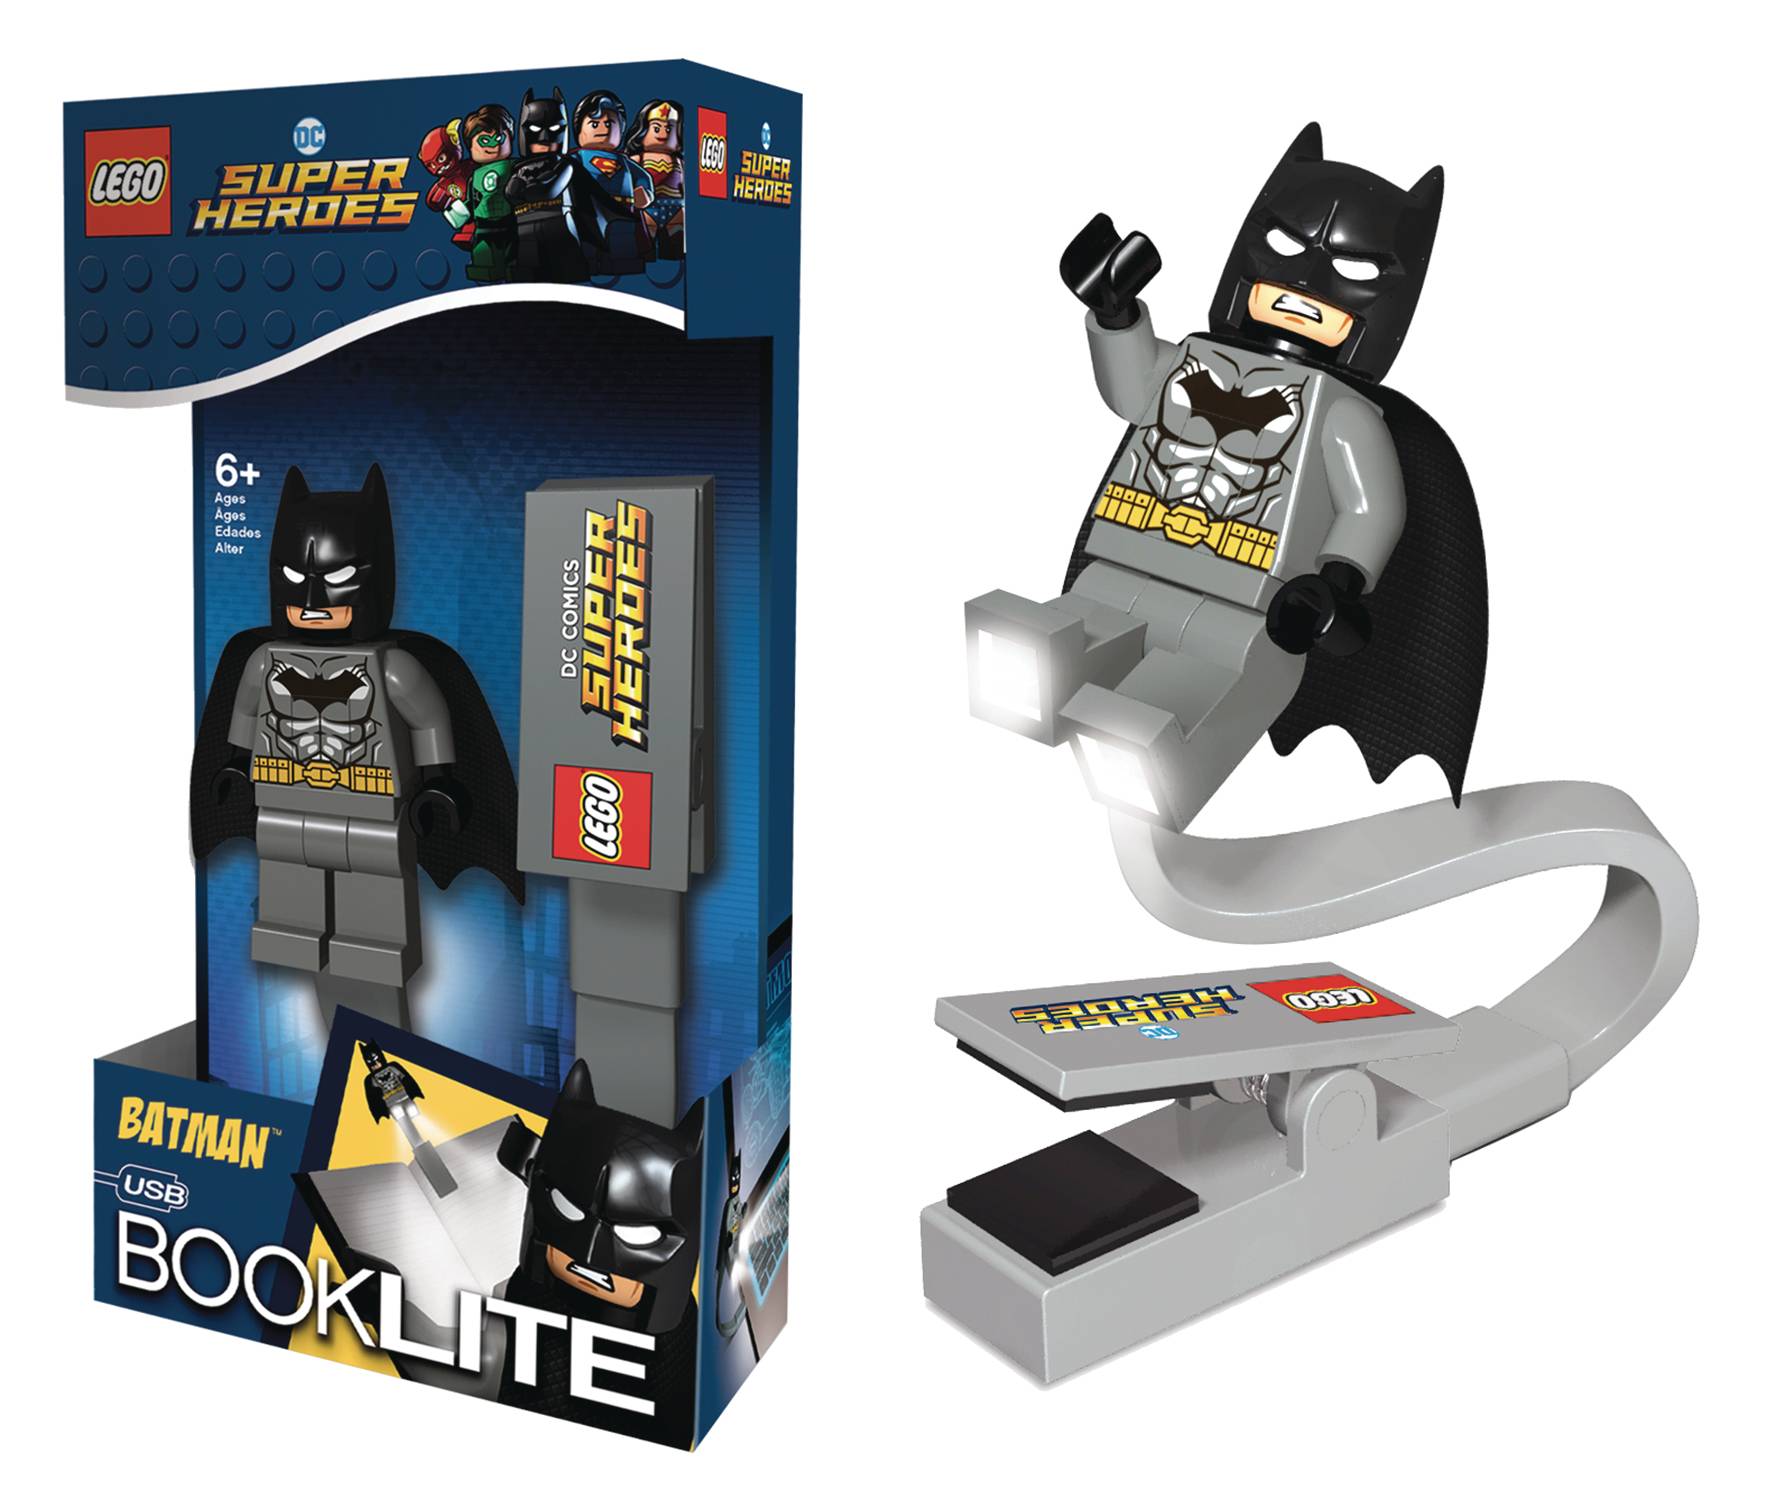 JAN202903 - DC HEROES LEGO BATMAN USB BOOK LIGHT - Previews World